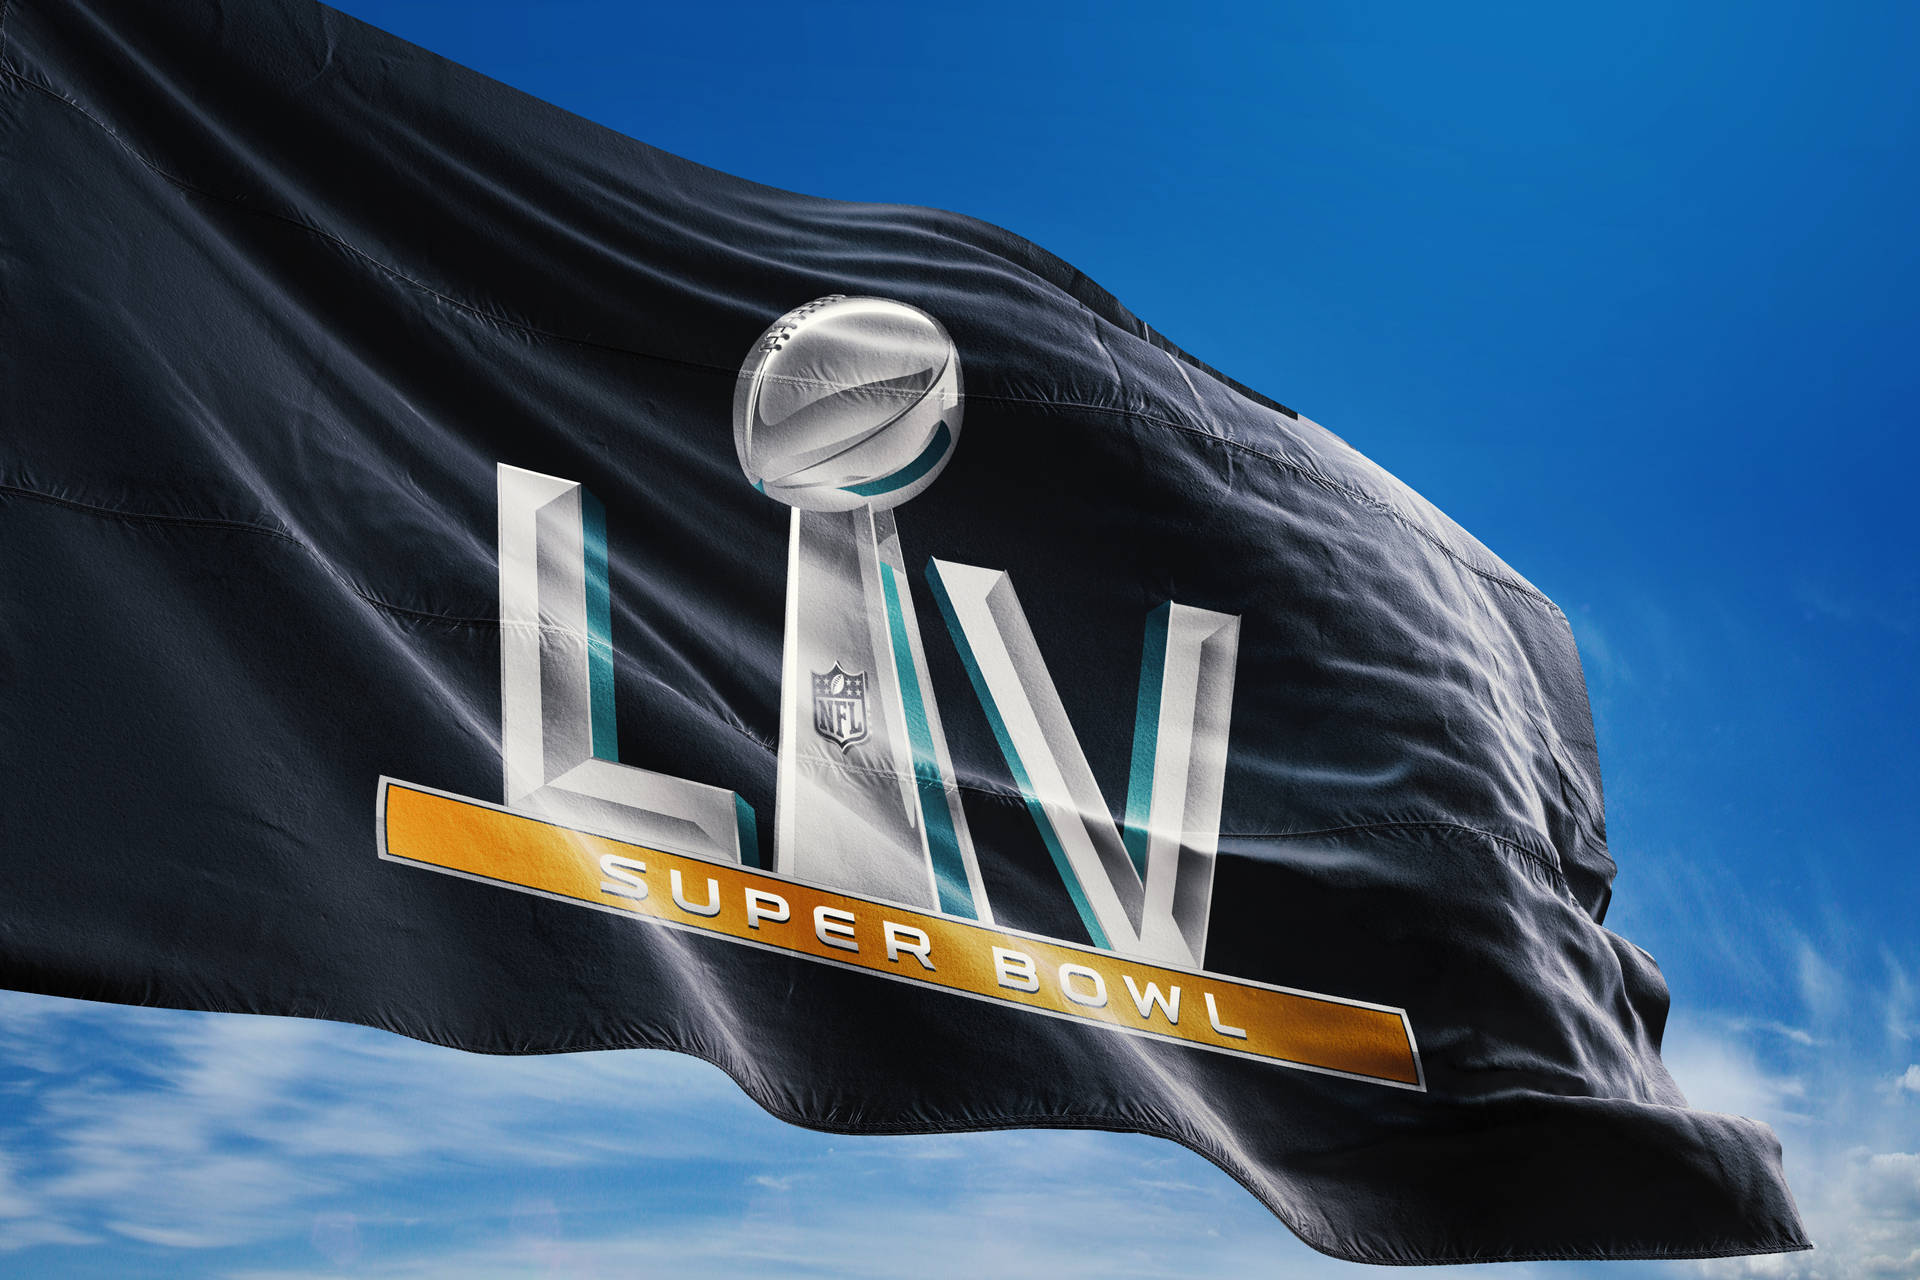 Super Bowl Lv Flag Background